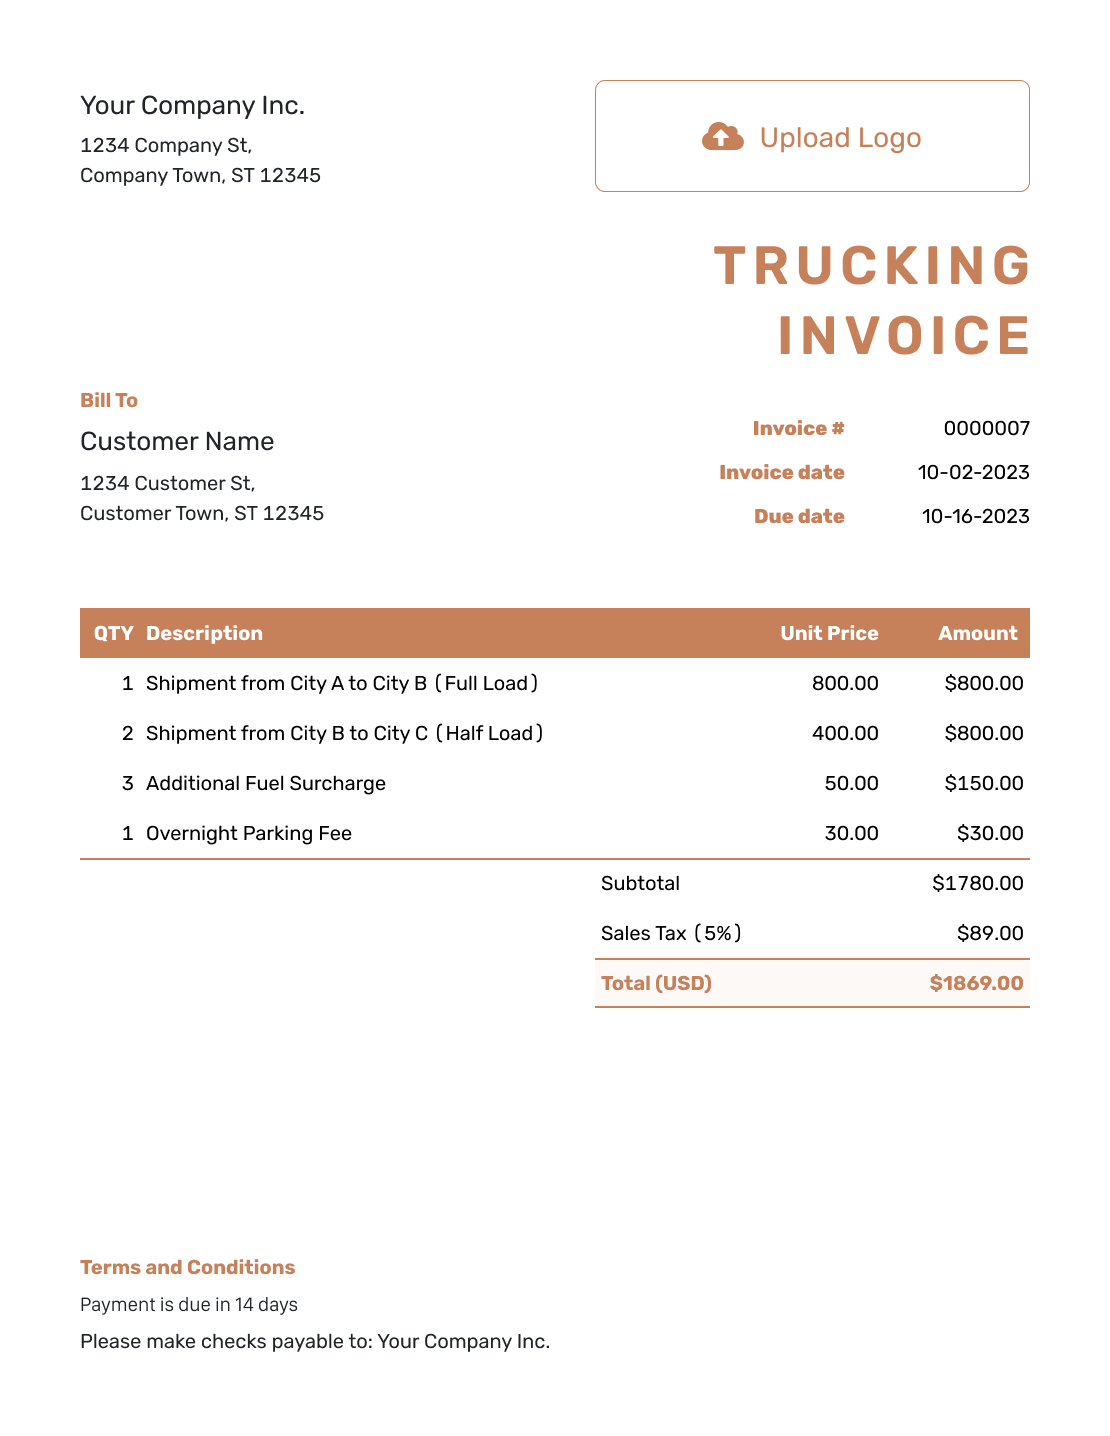 Standard Trucking Invoice Template